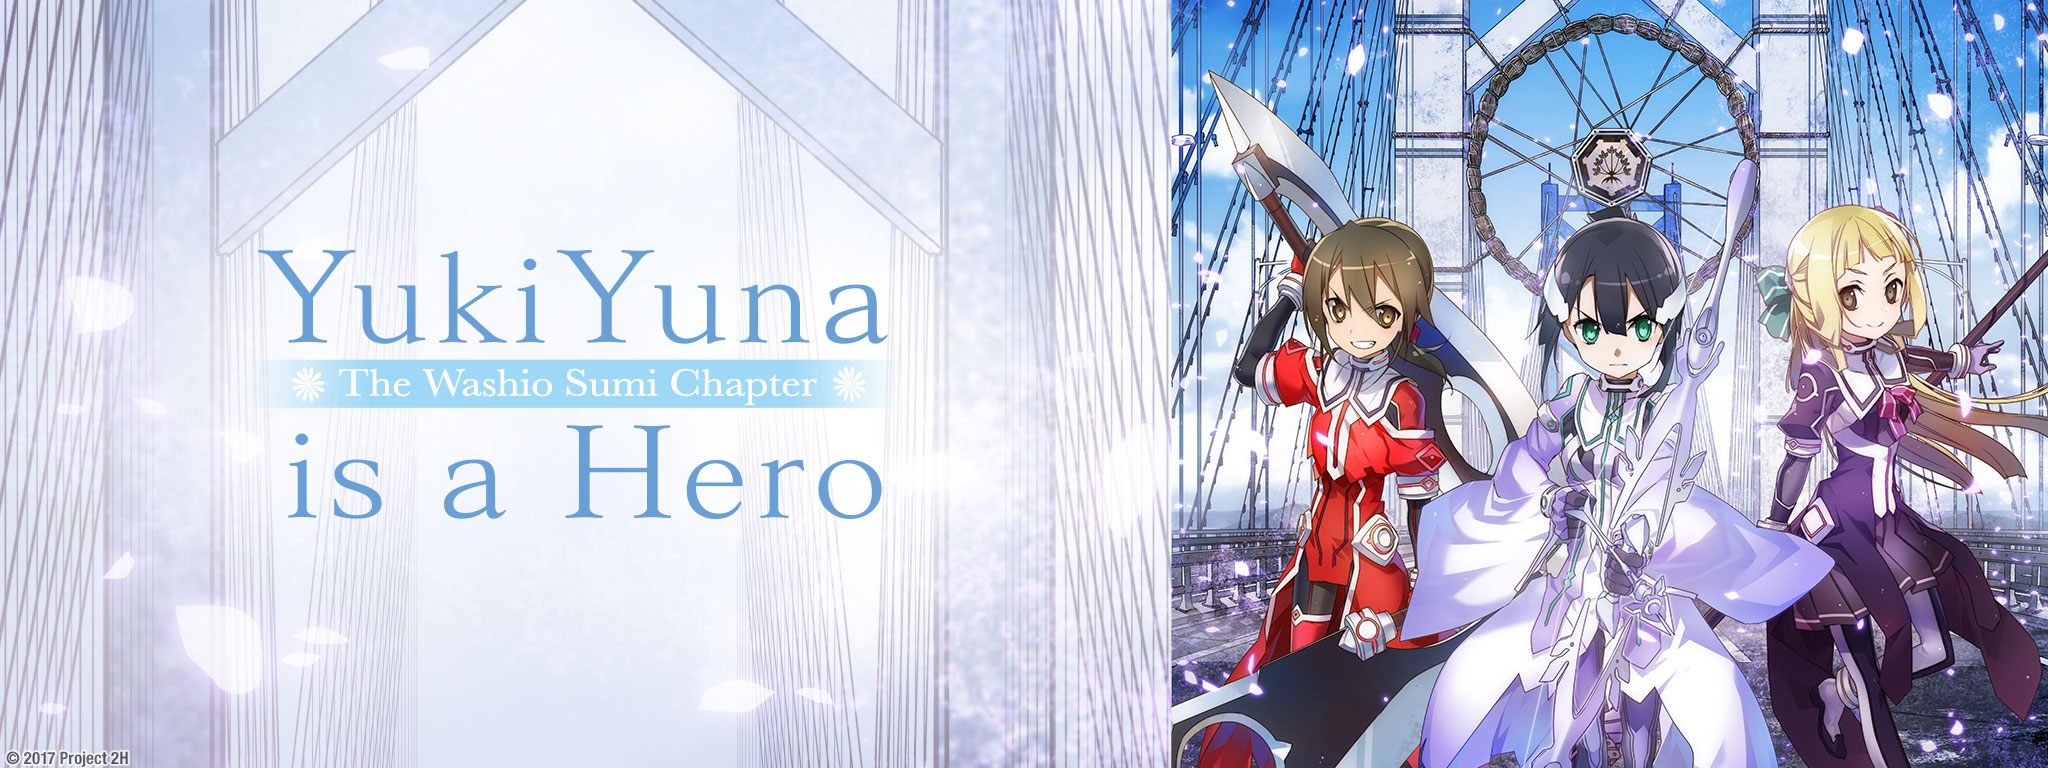 Title Art for Yuki Yuna is a Hero S2: The Washio Sumi Chapter